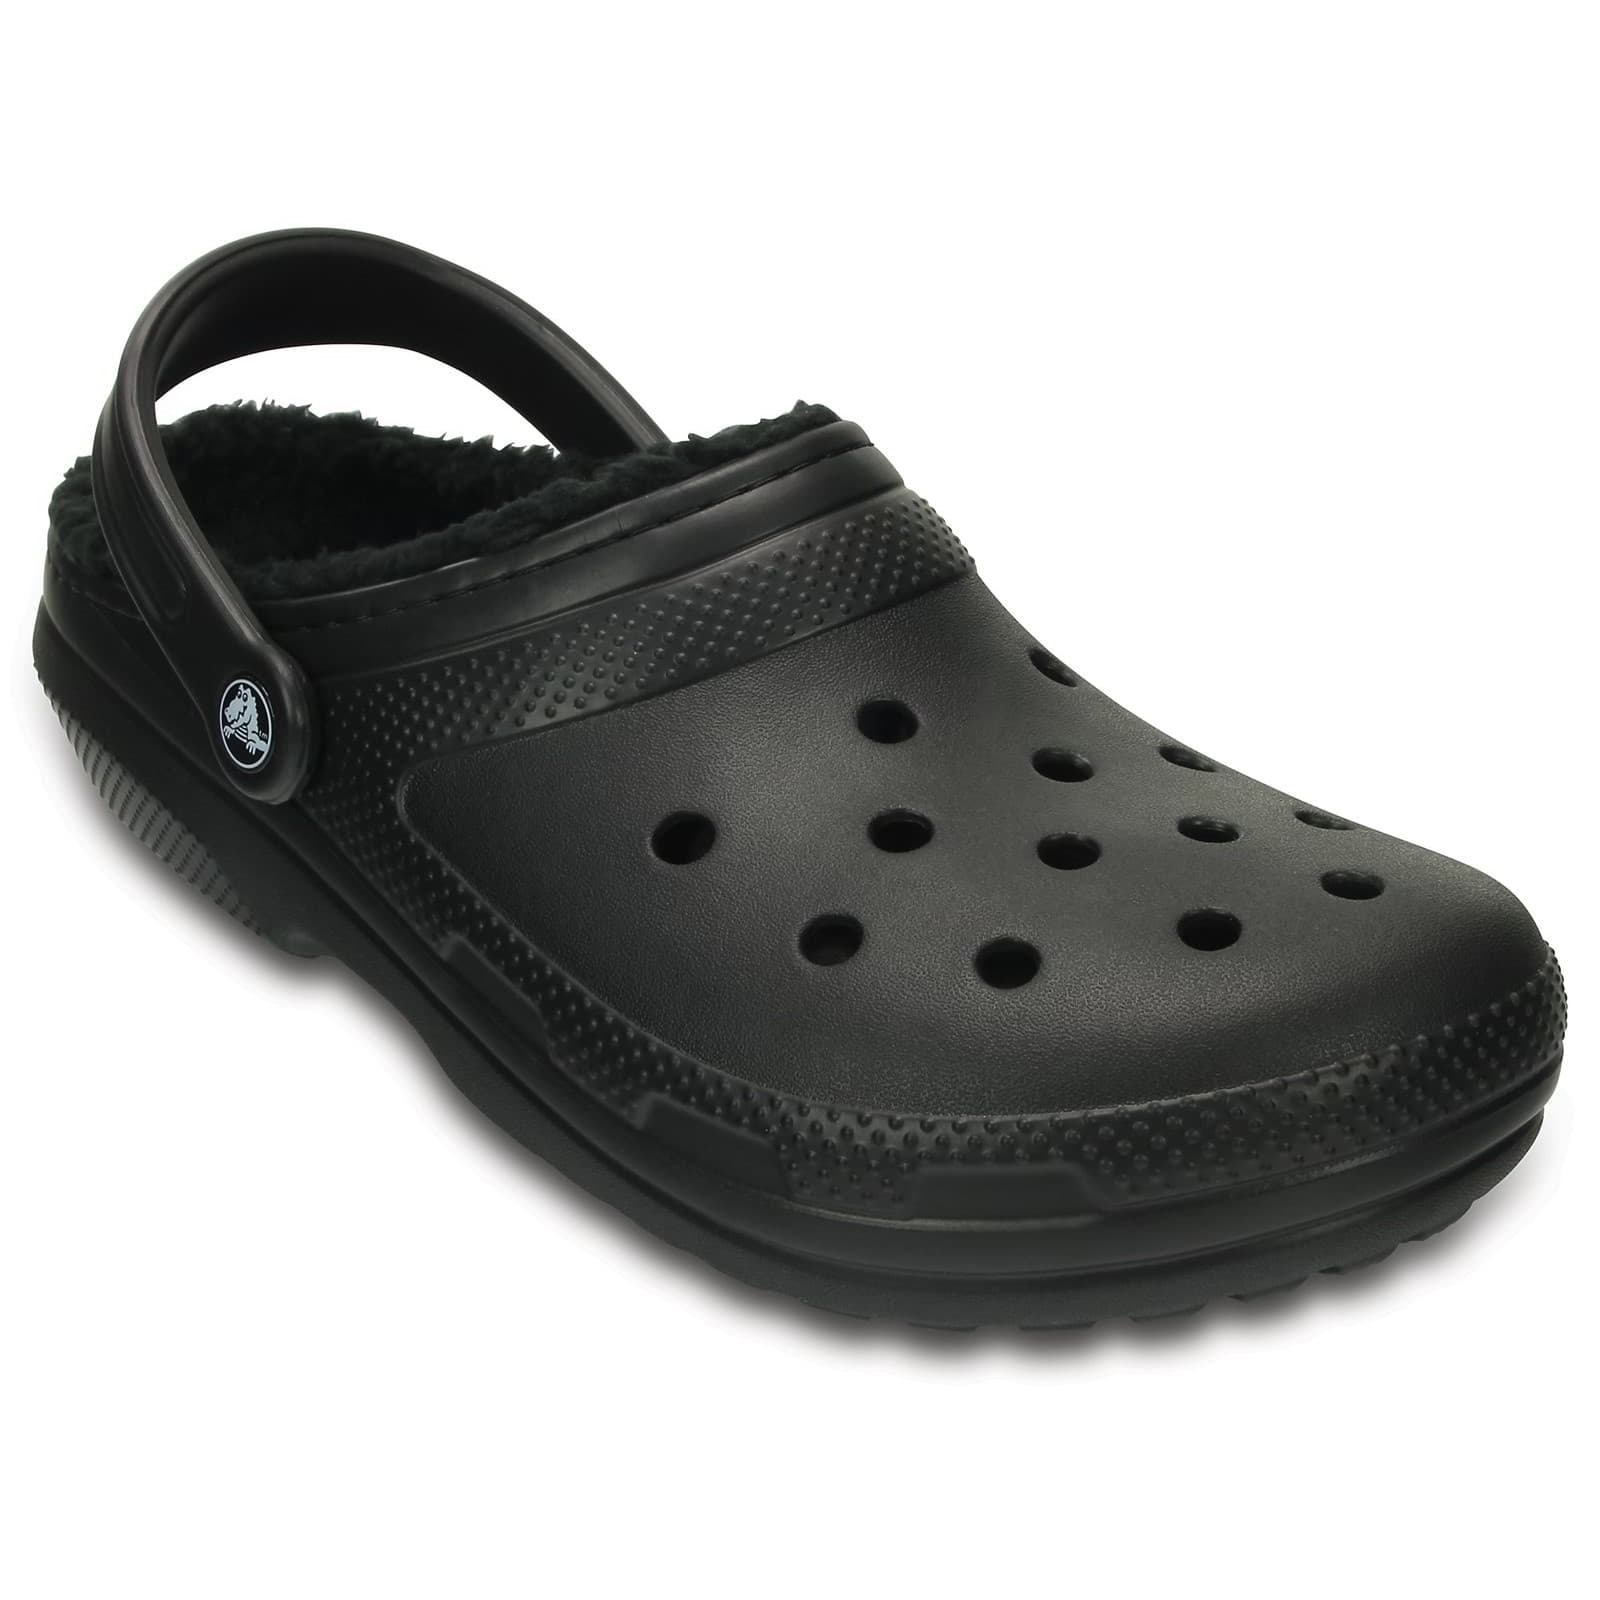 Crocs Men's Women's Classic Lined Clogs Slip On Slippers Shoes - UK 11